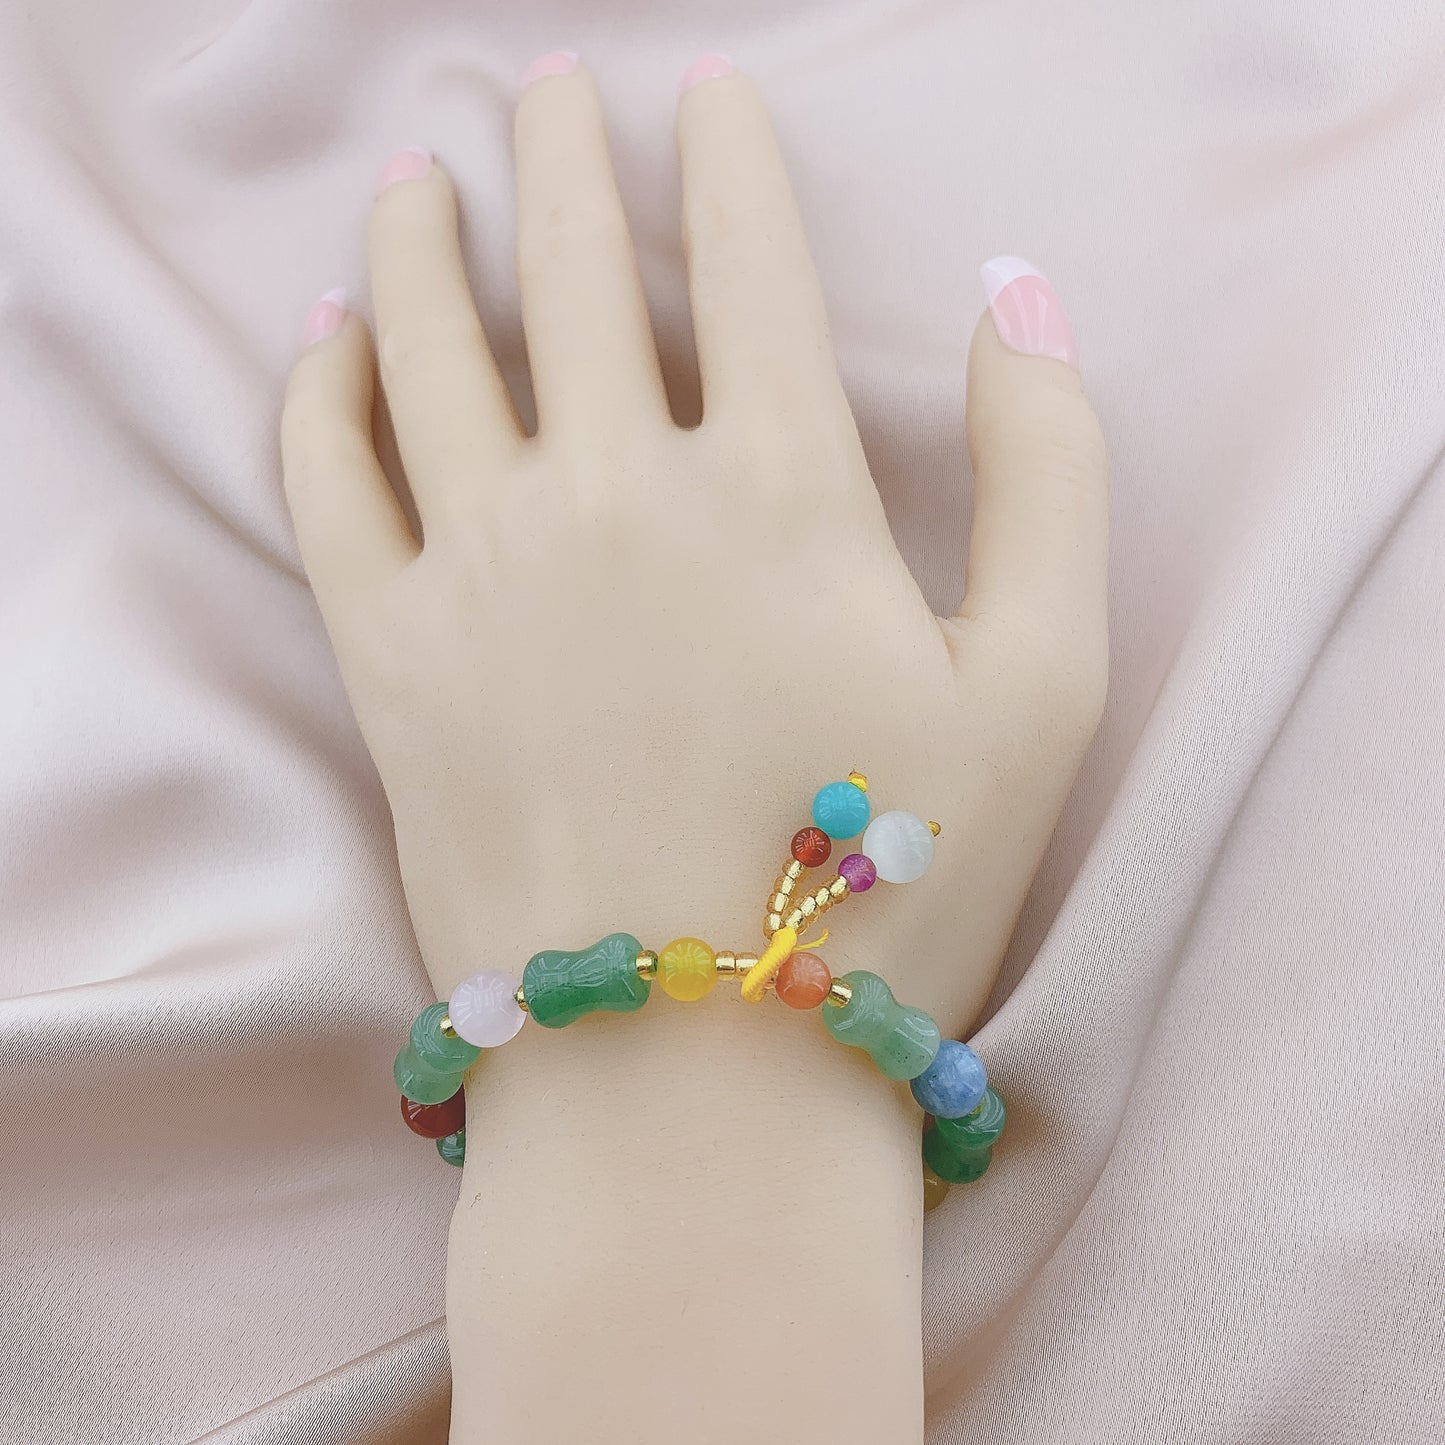 Women's Fashion Jade Beads Gemstone Bracelet